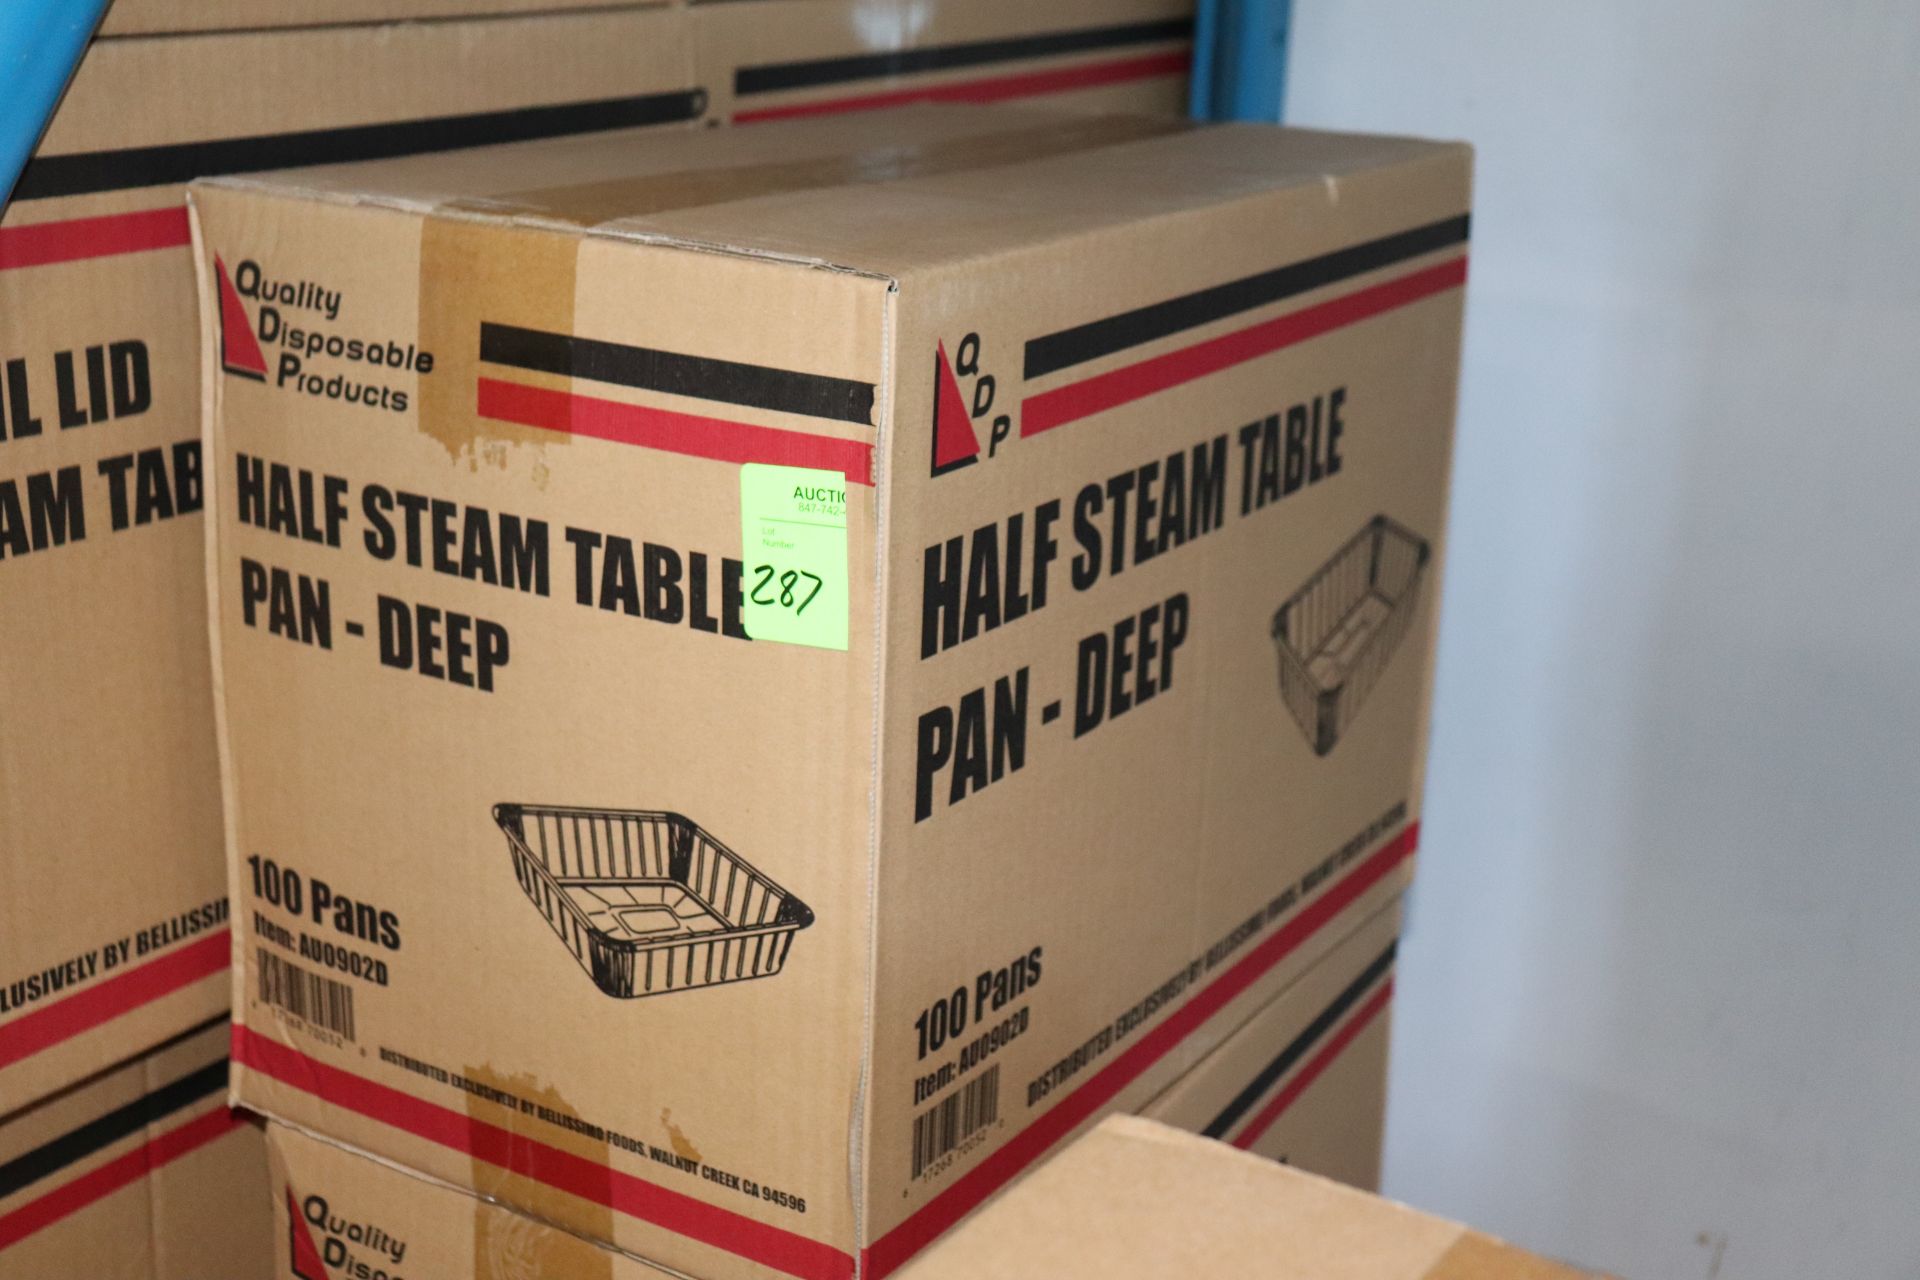 One box of half steam table pans, size Deep, Item #AU0902D, 100 pans per box